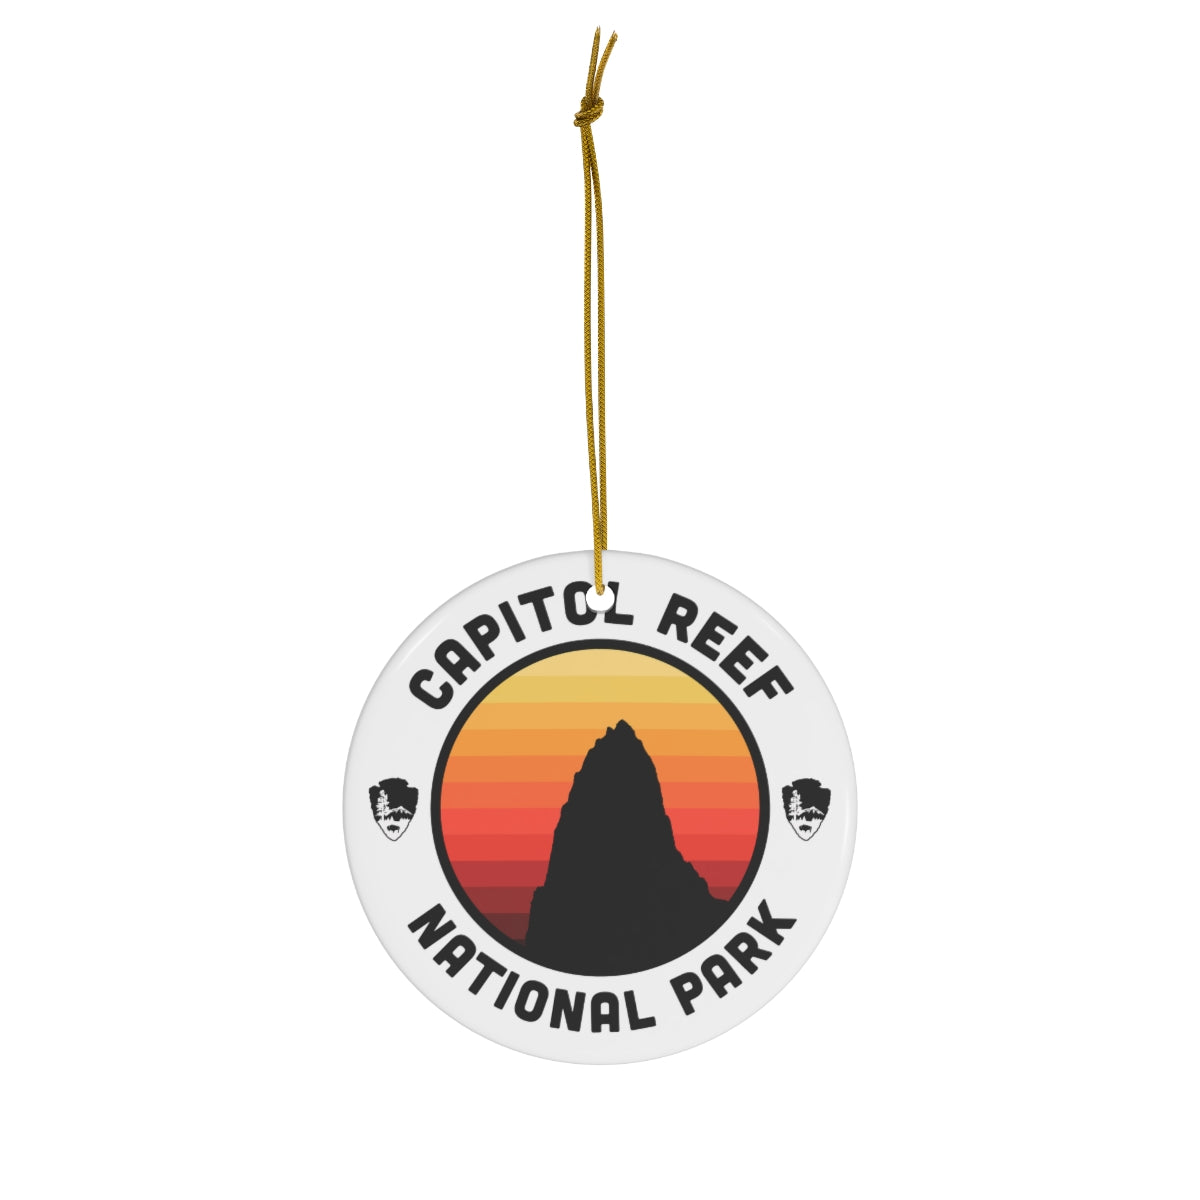 Capitol Reef National Park Ornament - Round Emblem Design